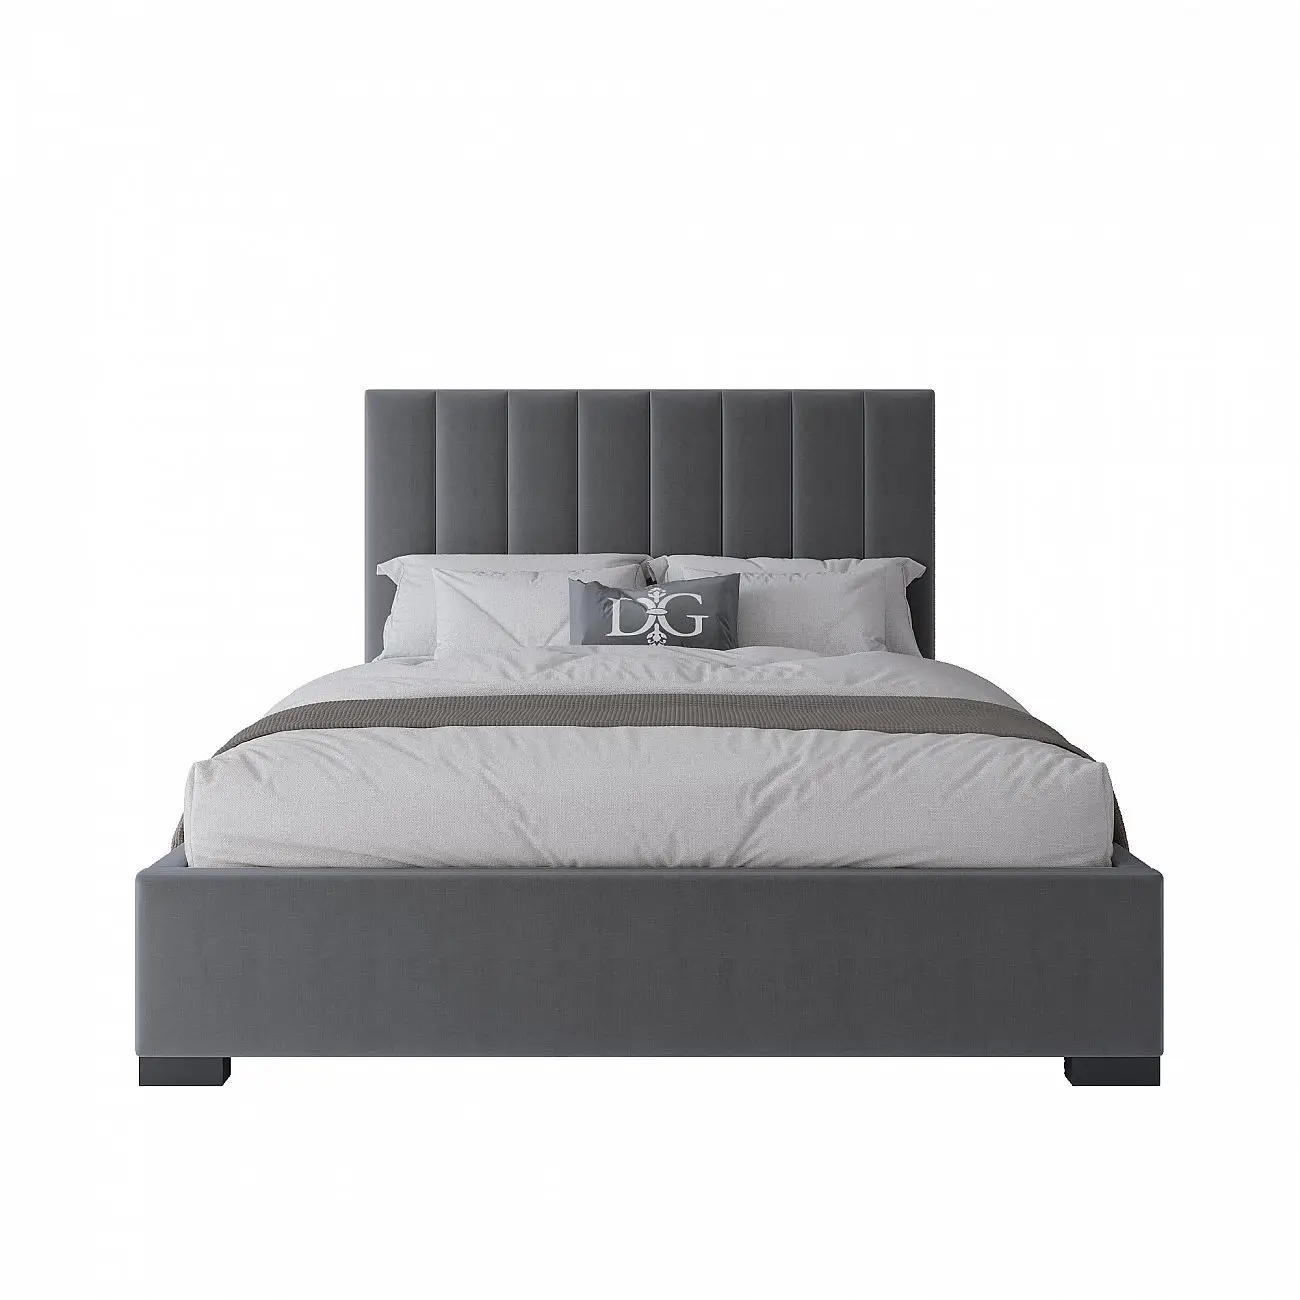 Double bed 160x200 grey Laguna